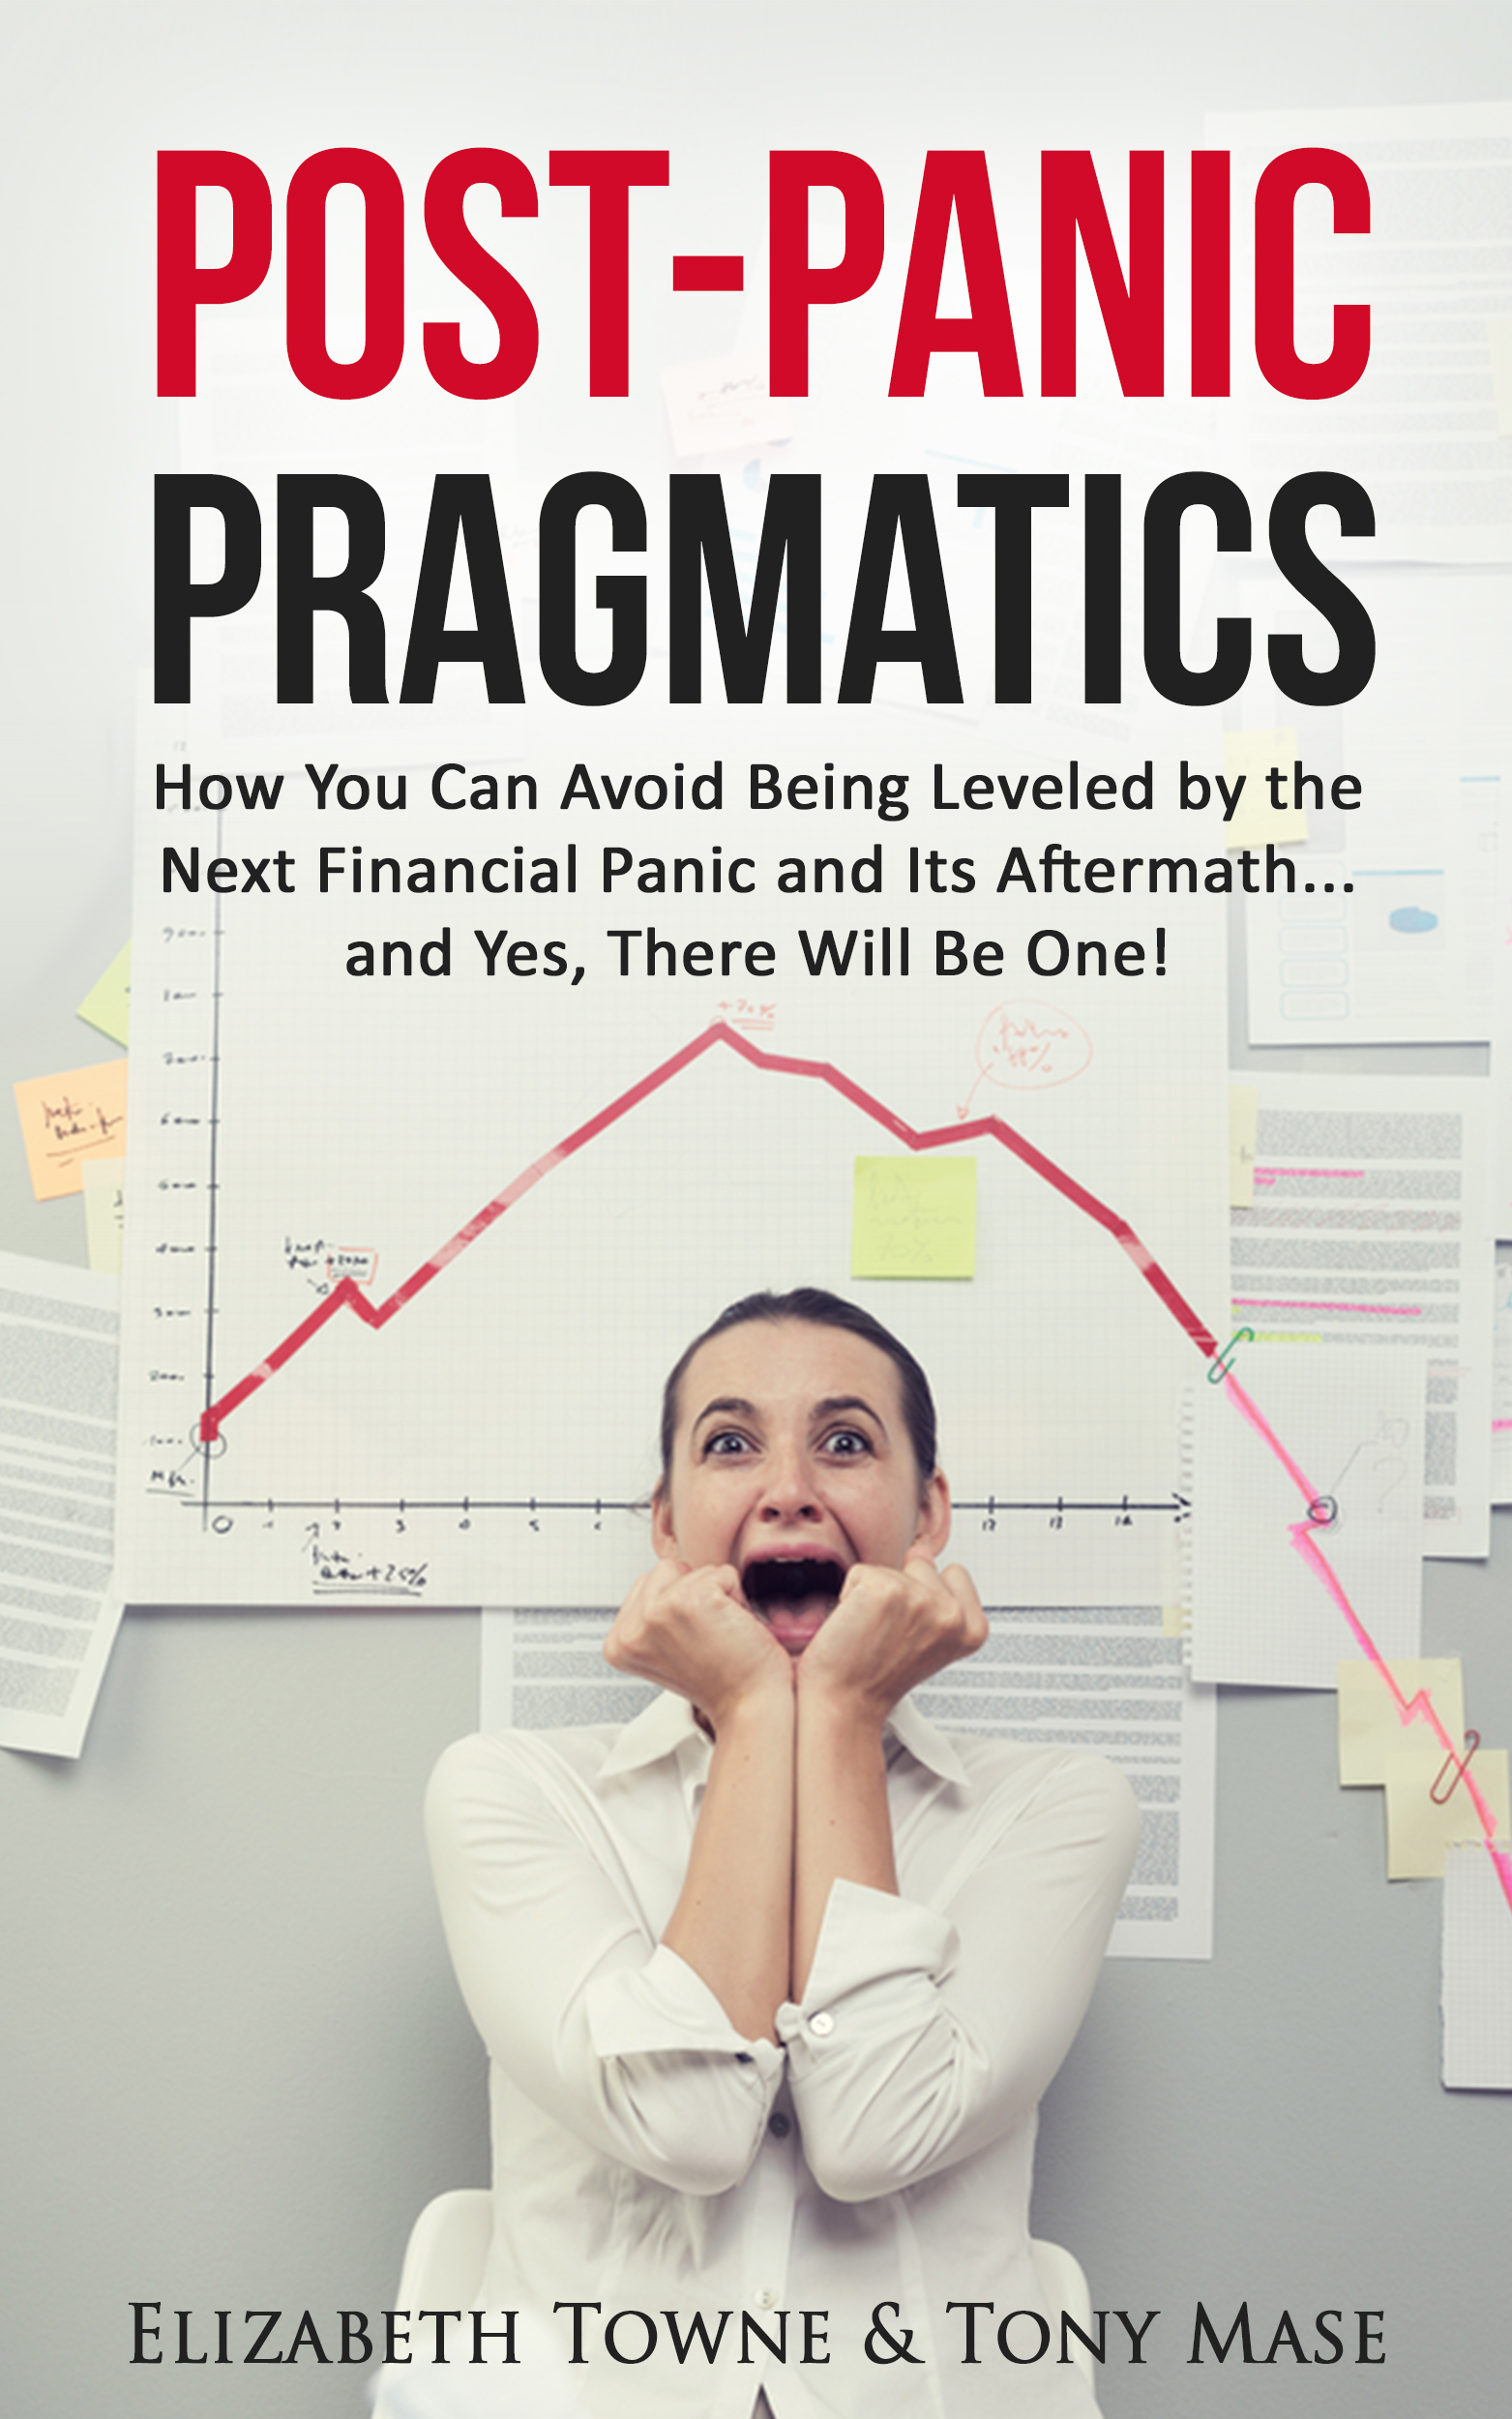 FREE: Post-Panic Pragmatics by Elizabeth Towne